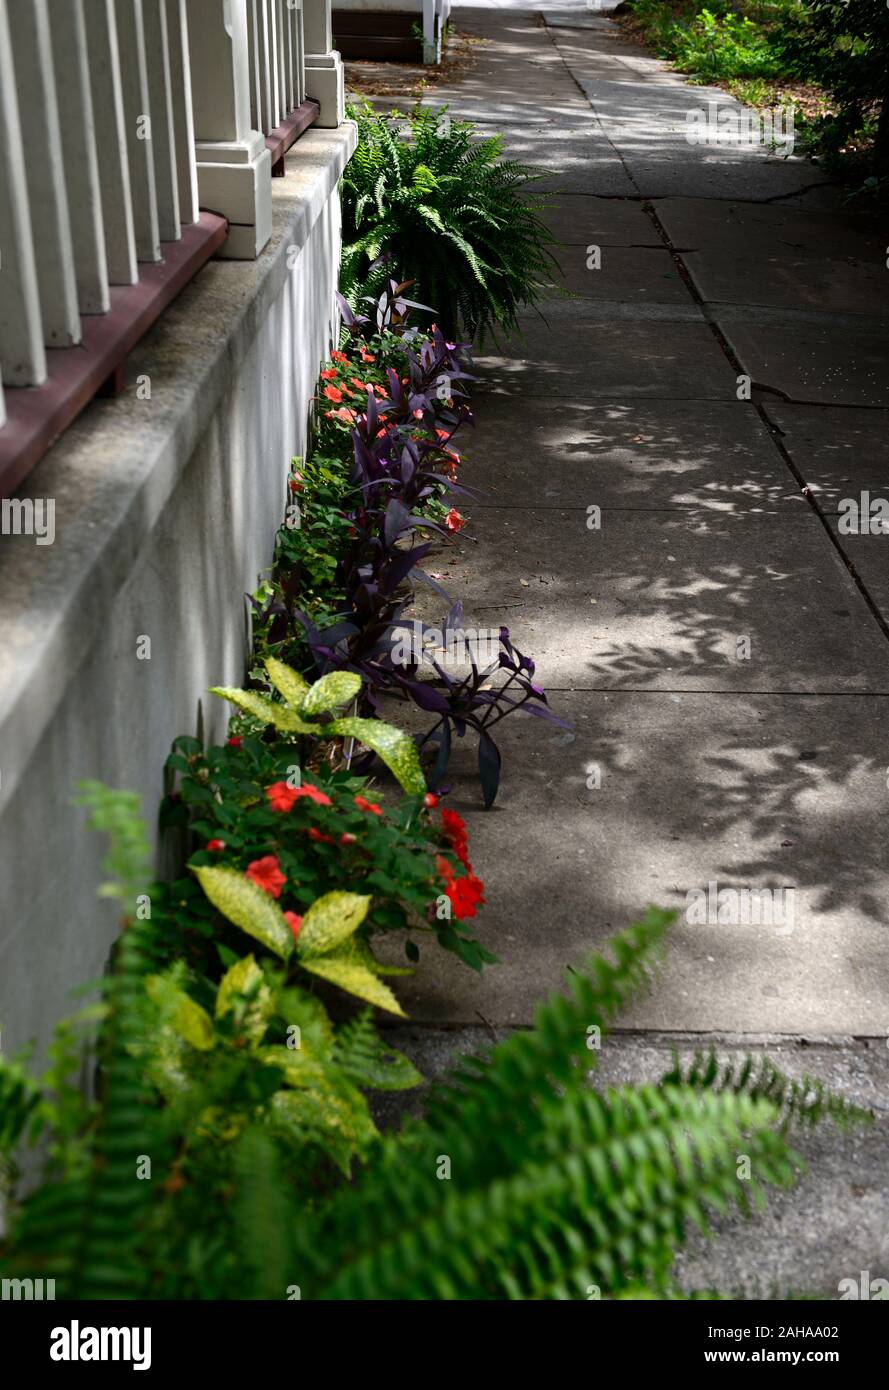 sidewalk flower display,outside house,urban garden,gardening,path,pathway,urban greening,flower,flowers,tropical,buzy lizzies,savannah,georgia, RM USA Stock Photo